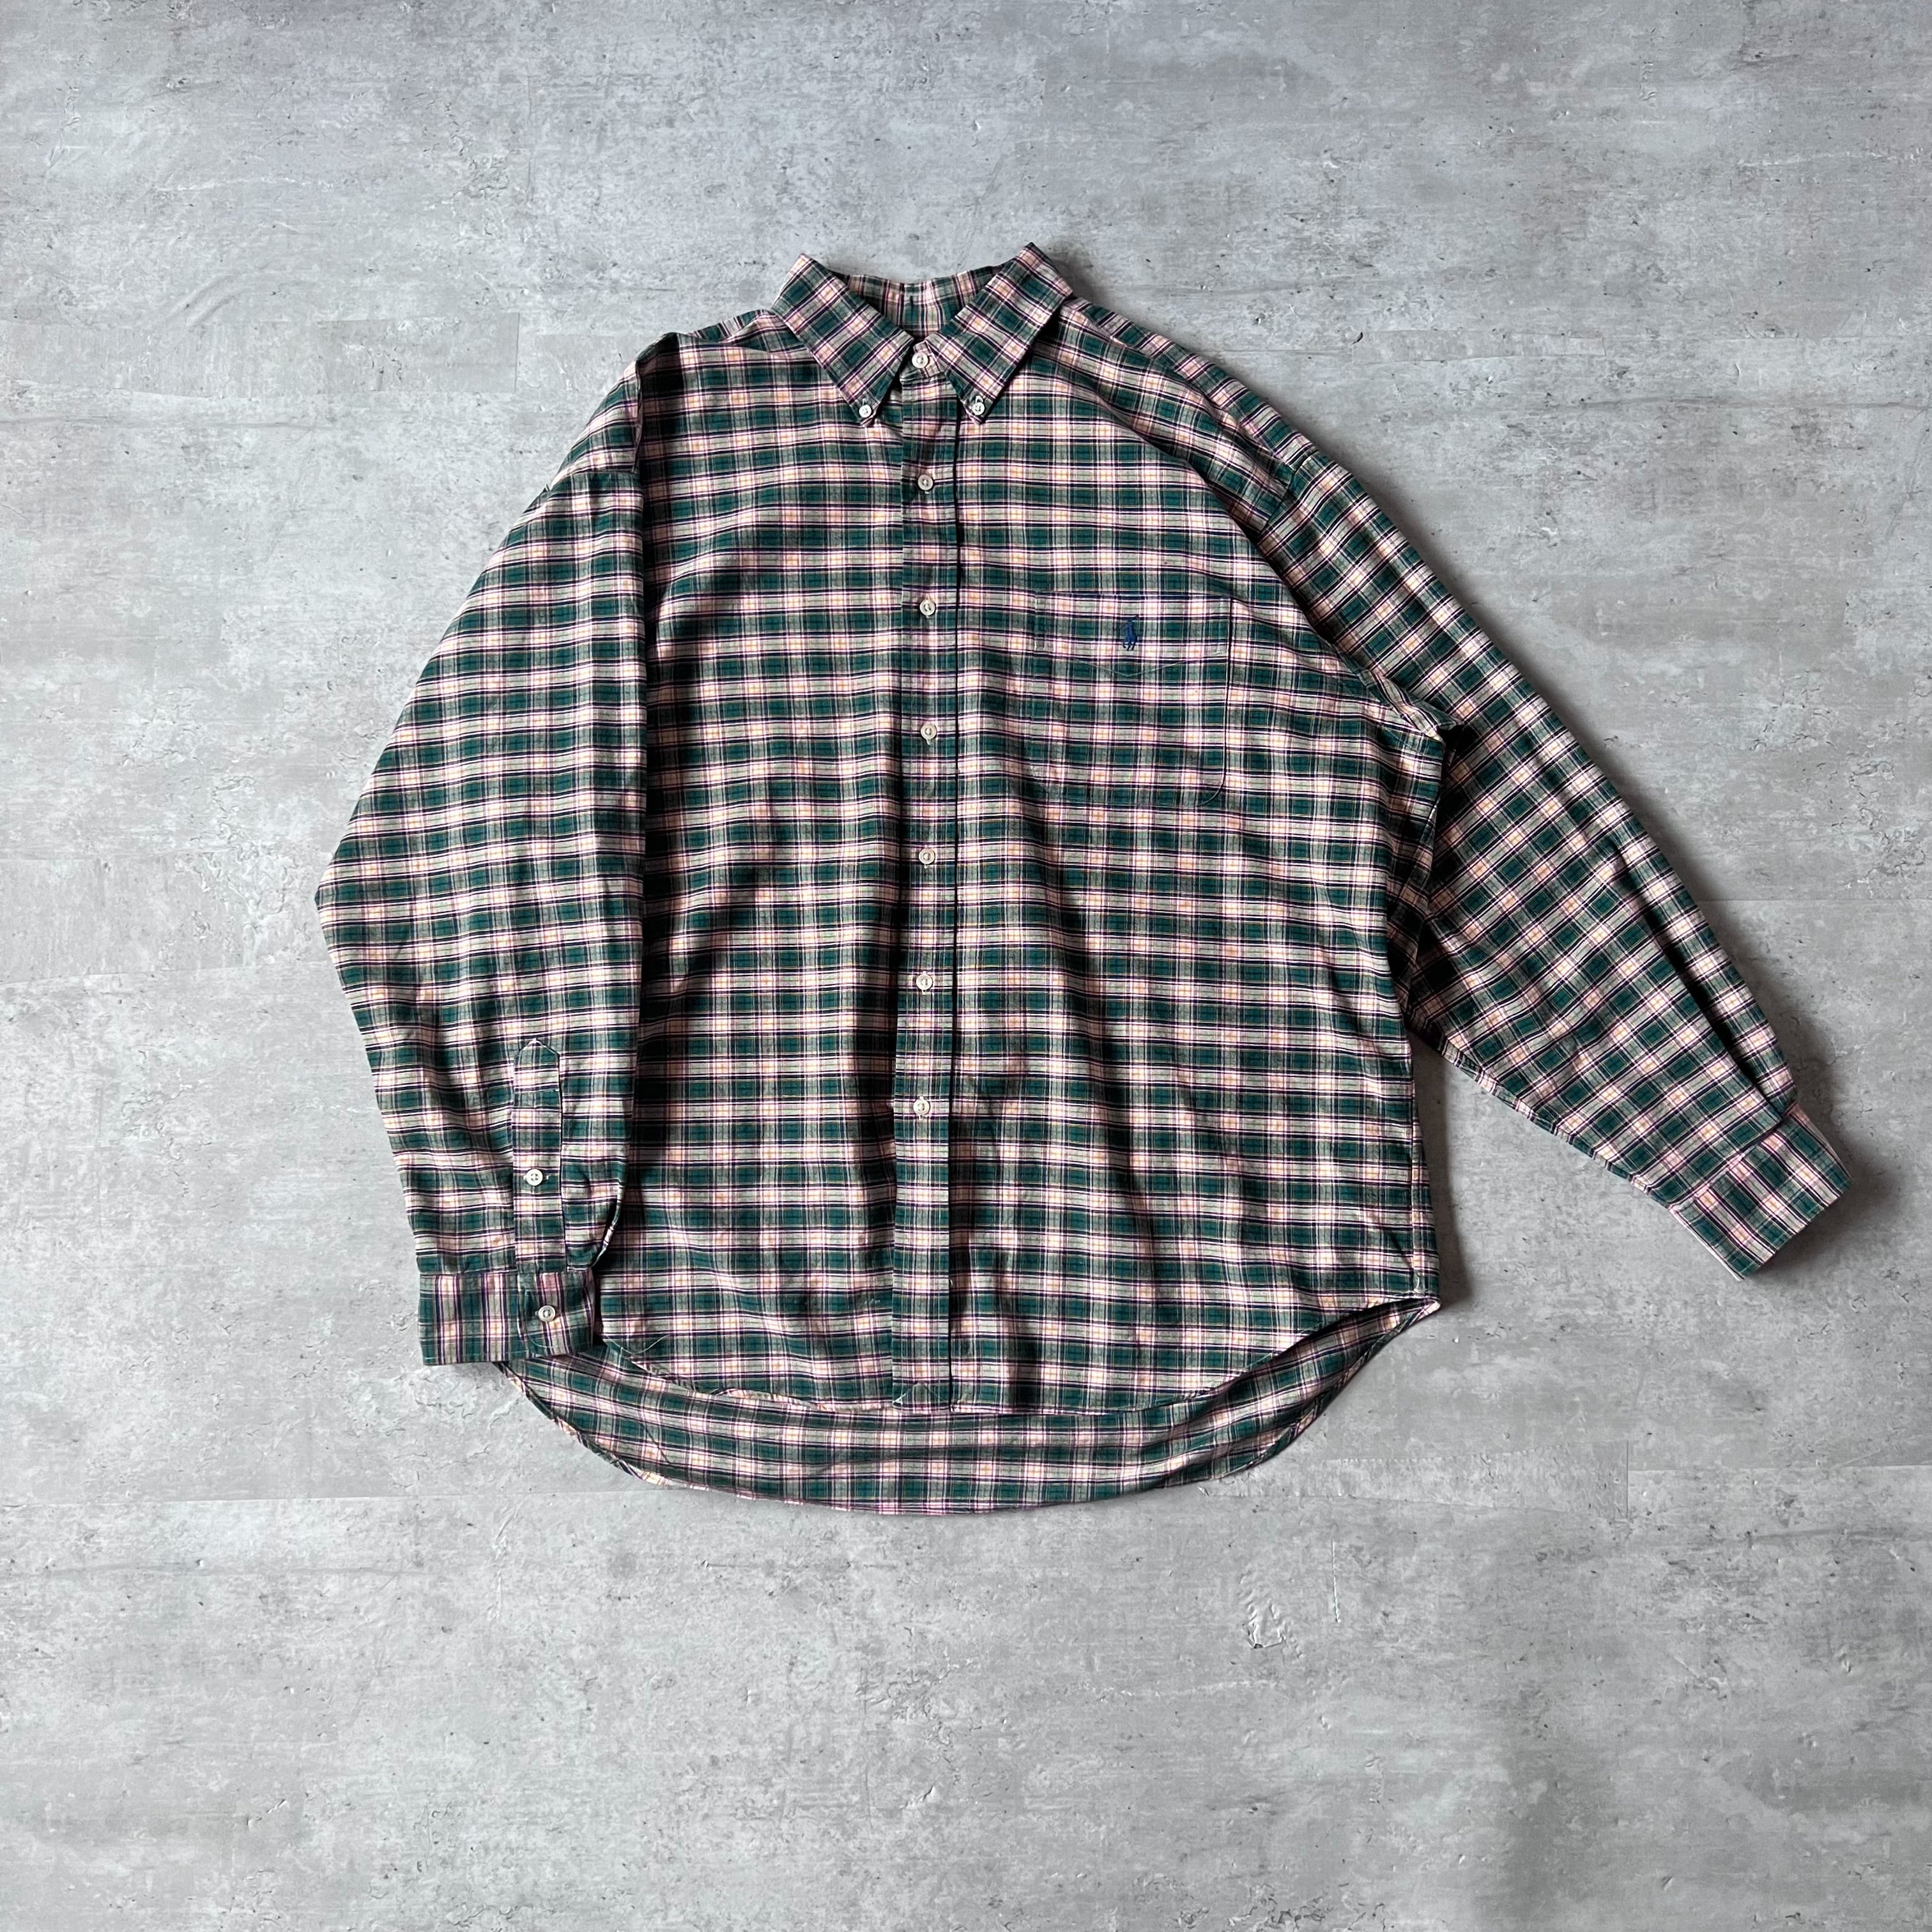 90s “Ralph Lauren” BIG SHIRT green check pattern B.D. shirt 90年代 ラルフローレン  ビッグシャツ XL グリーンチェック ボタンダウンシャツ